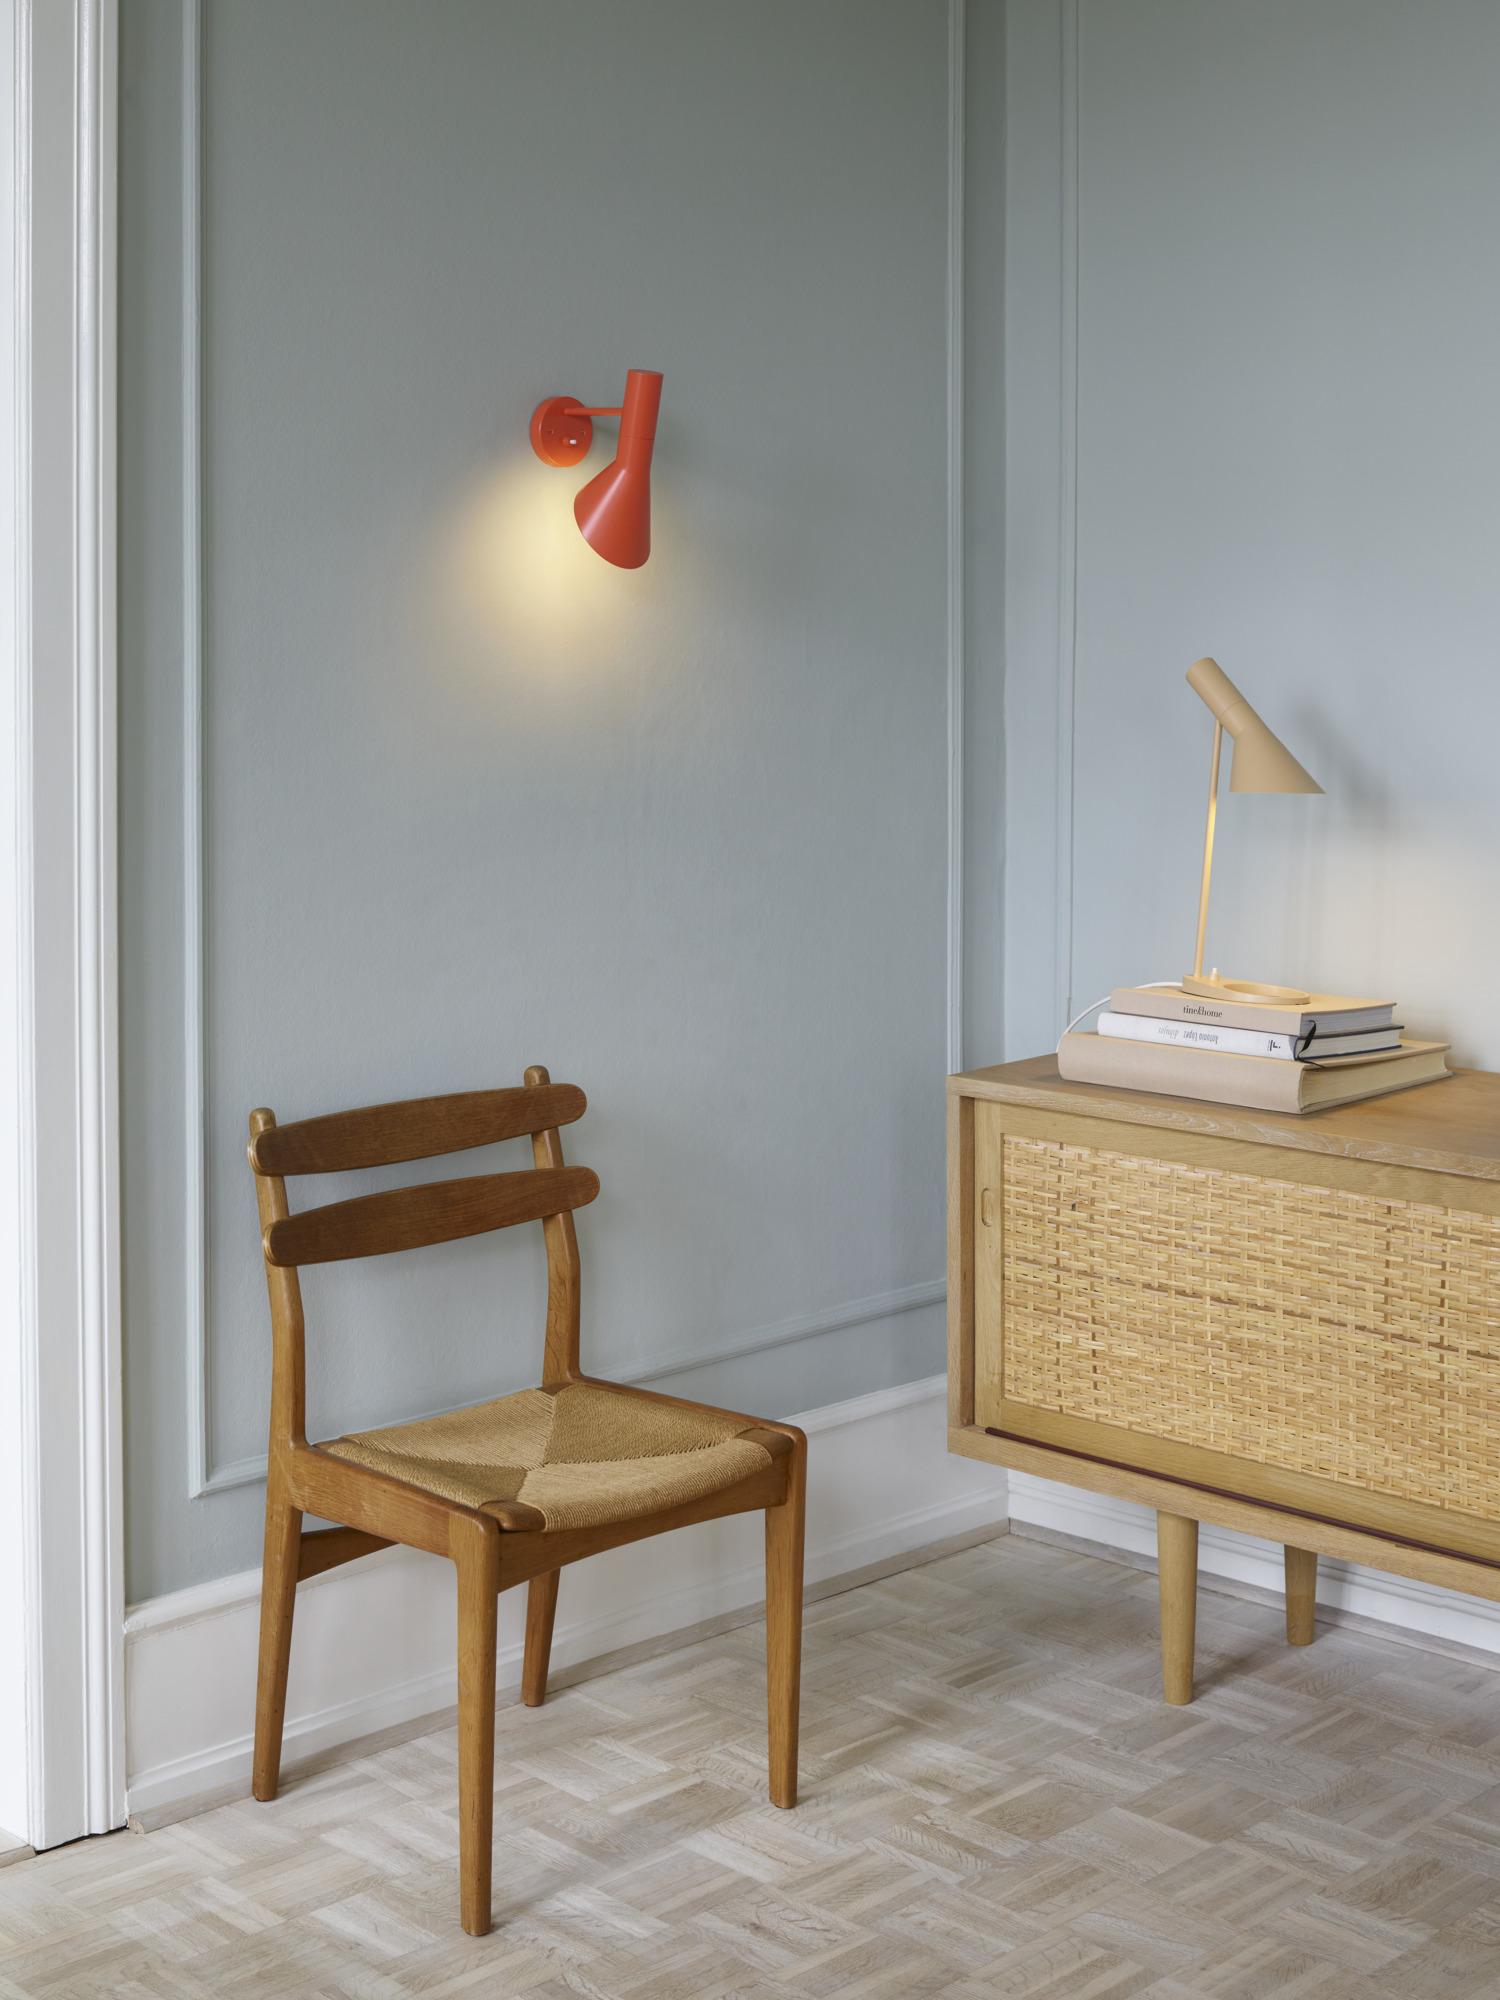 Arne Jacobsen AJ Wall Light for Louis Poulsen in Pale Petroleum For Sale 1